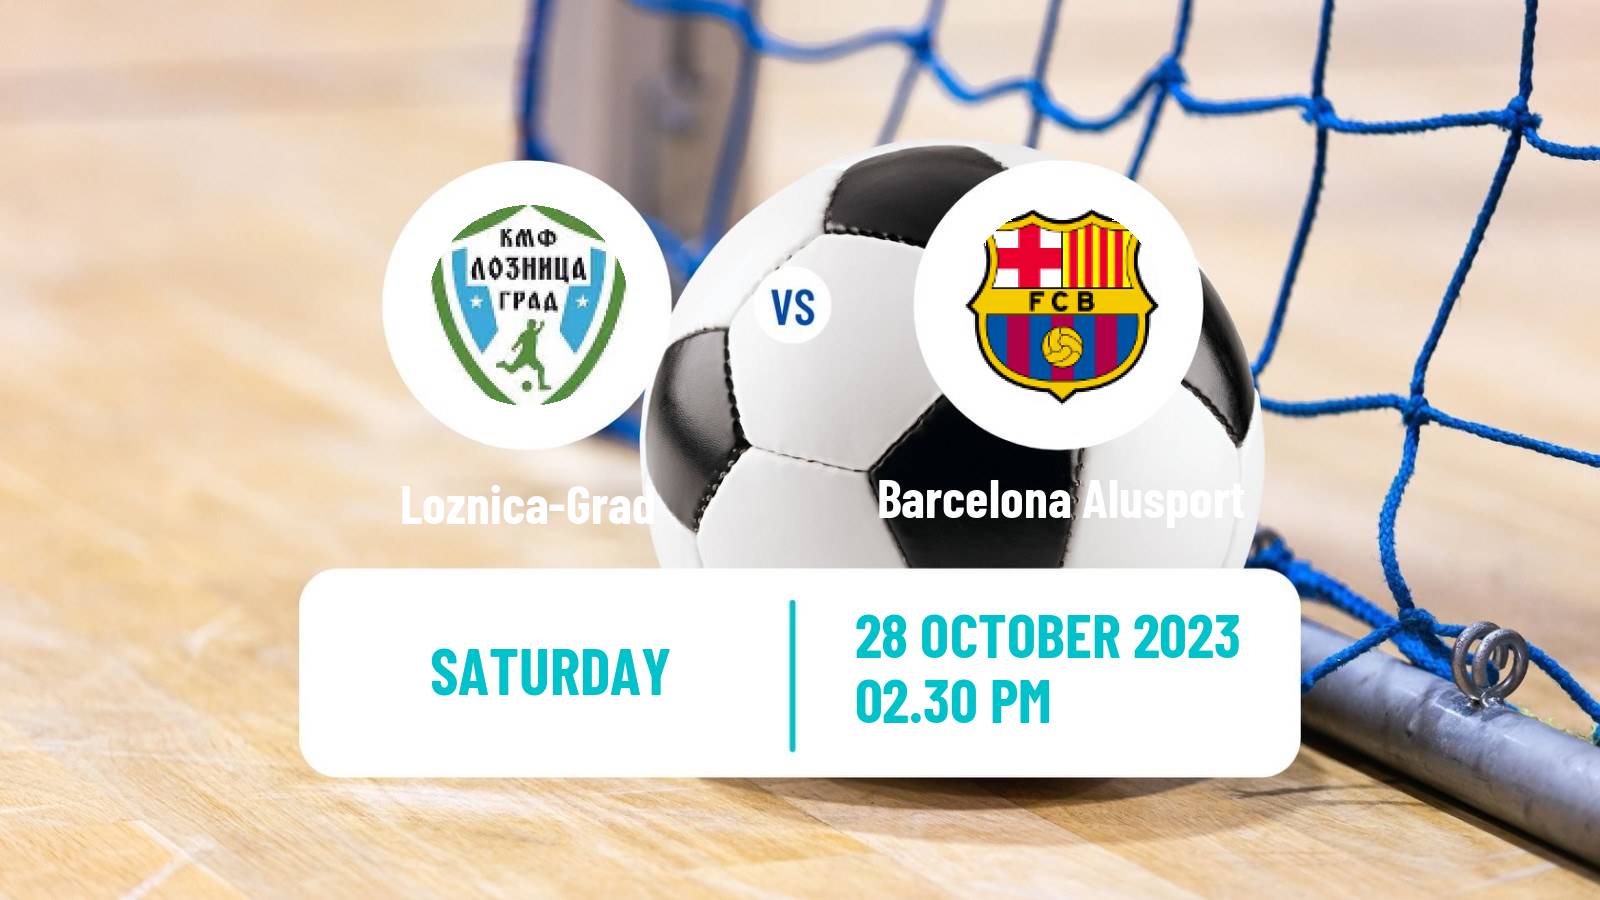 Futsal UEFA Futsal Champions League Loznica-Grad - Barcelona Alusport